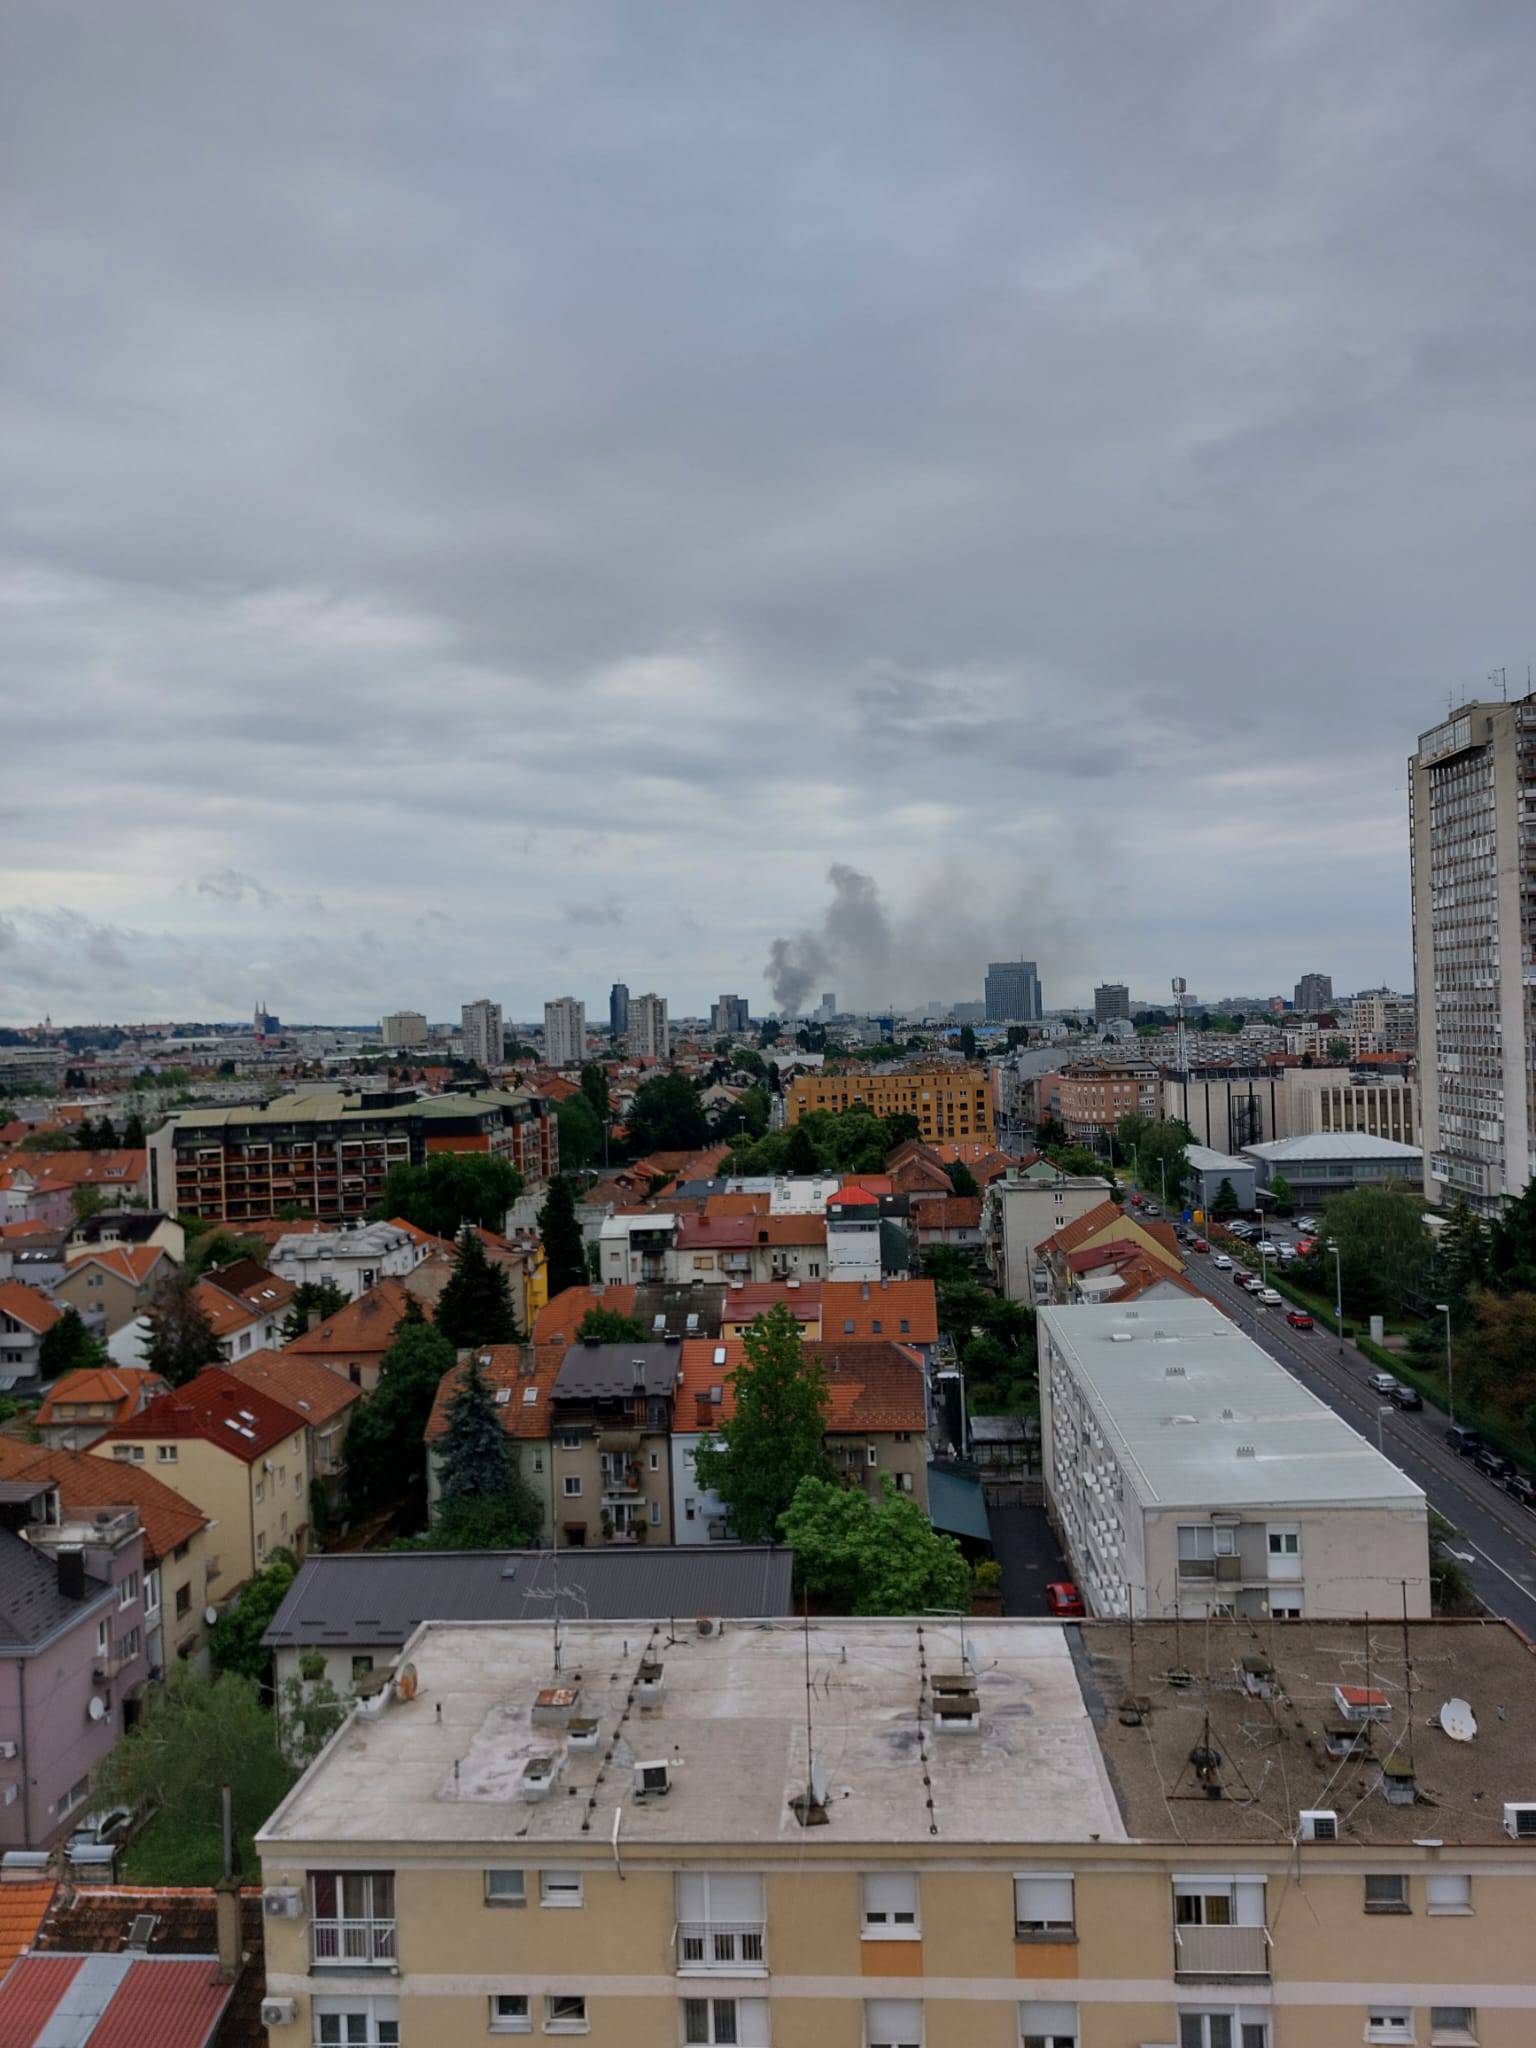 VIDEO Gori nekoliko vagona na Glavnom kolodvoru:  Jak dim se vidi i iz drugih dijelova Zagreba